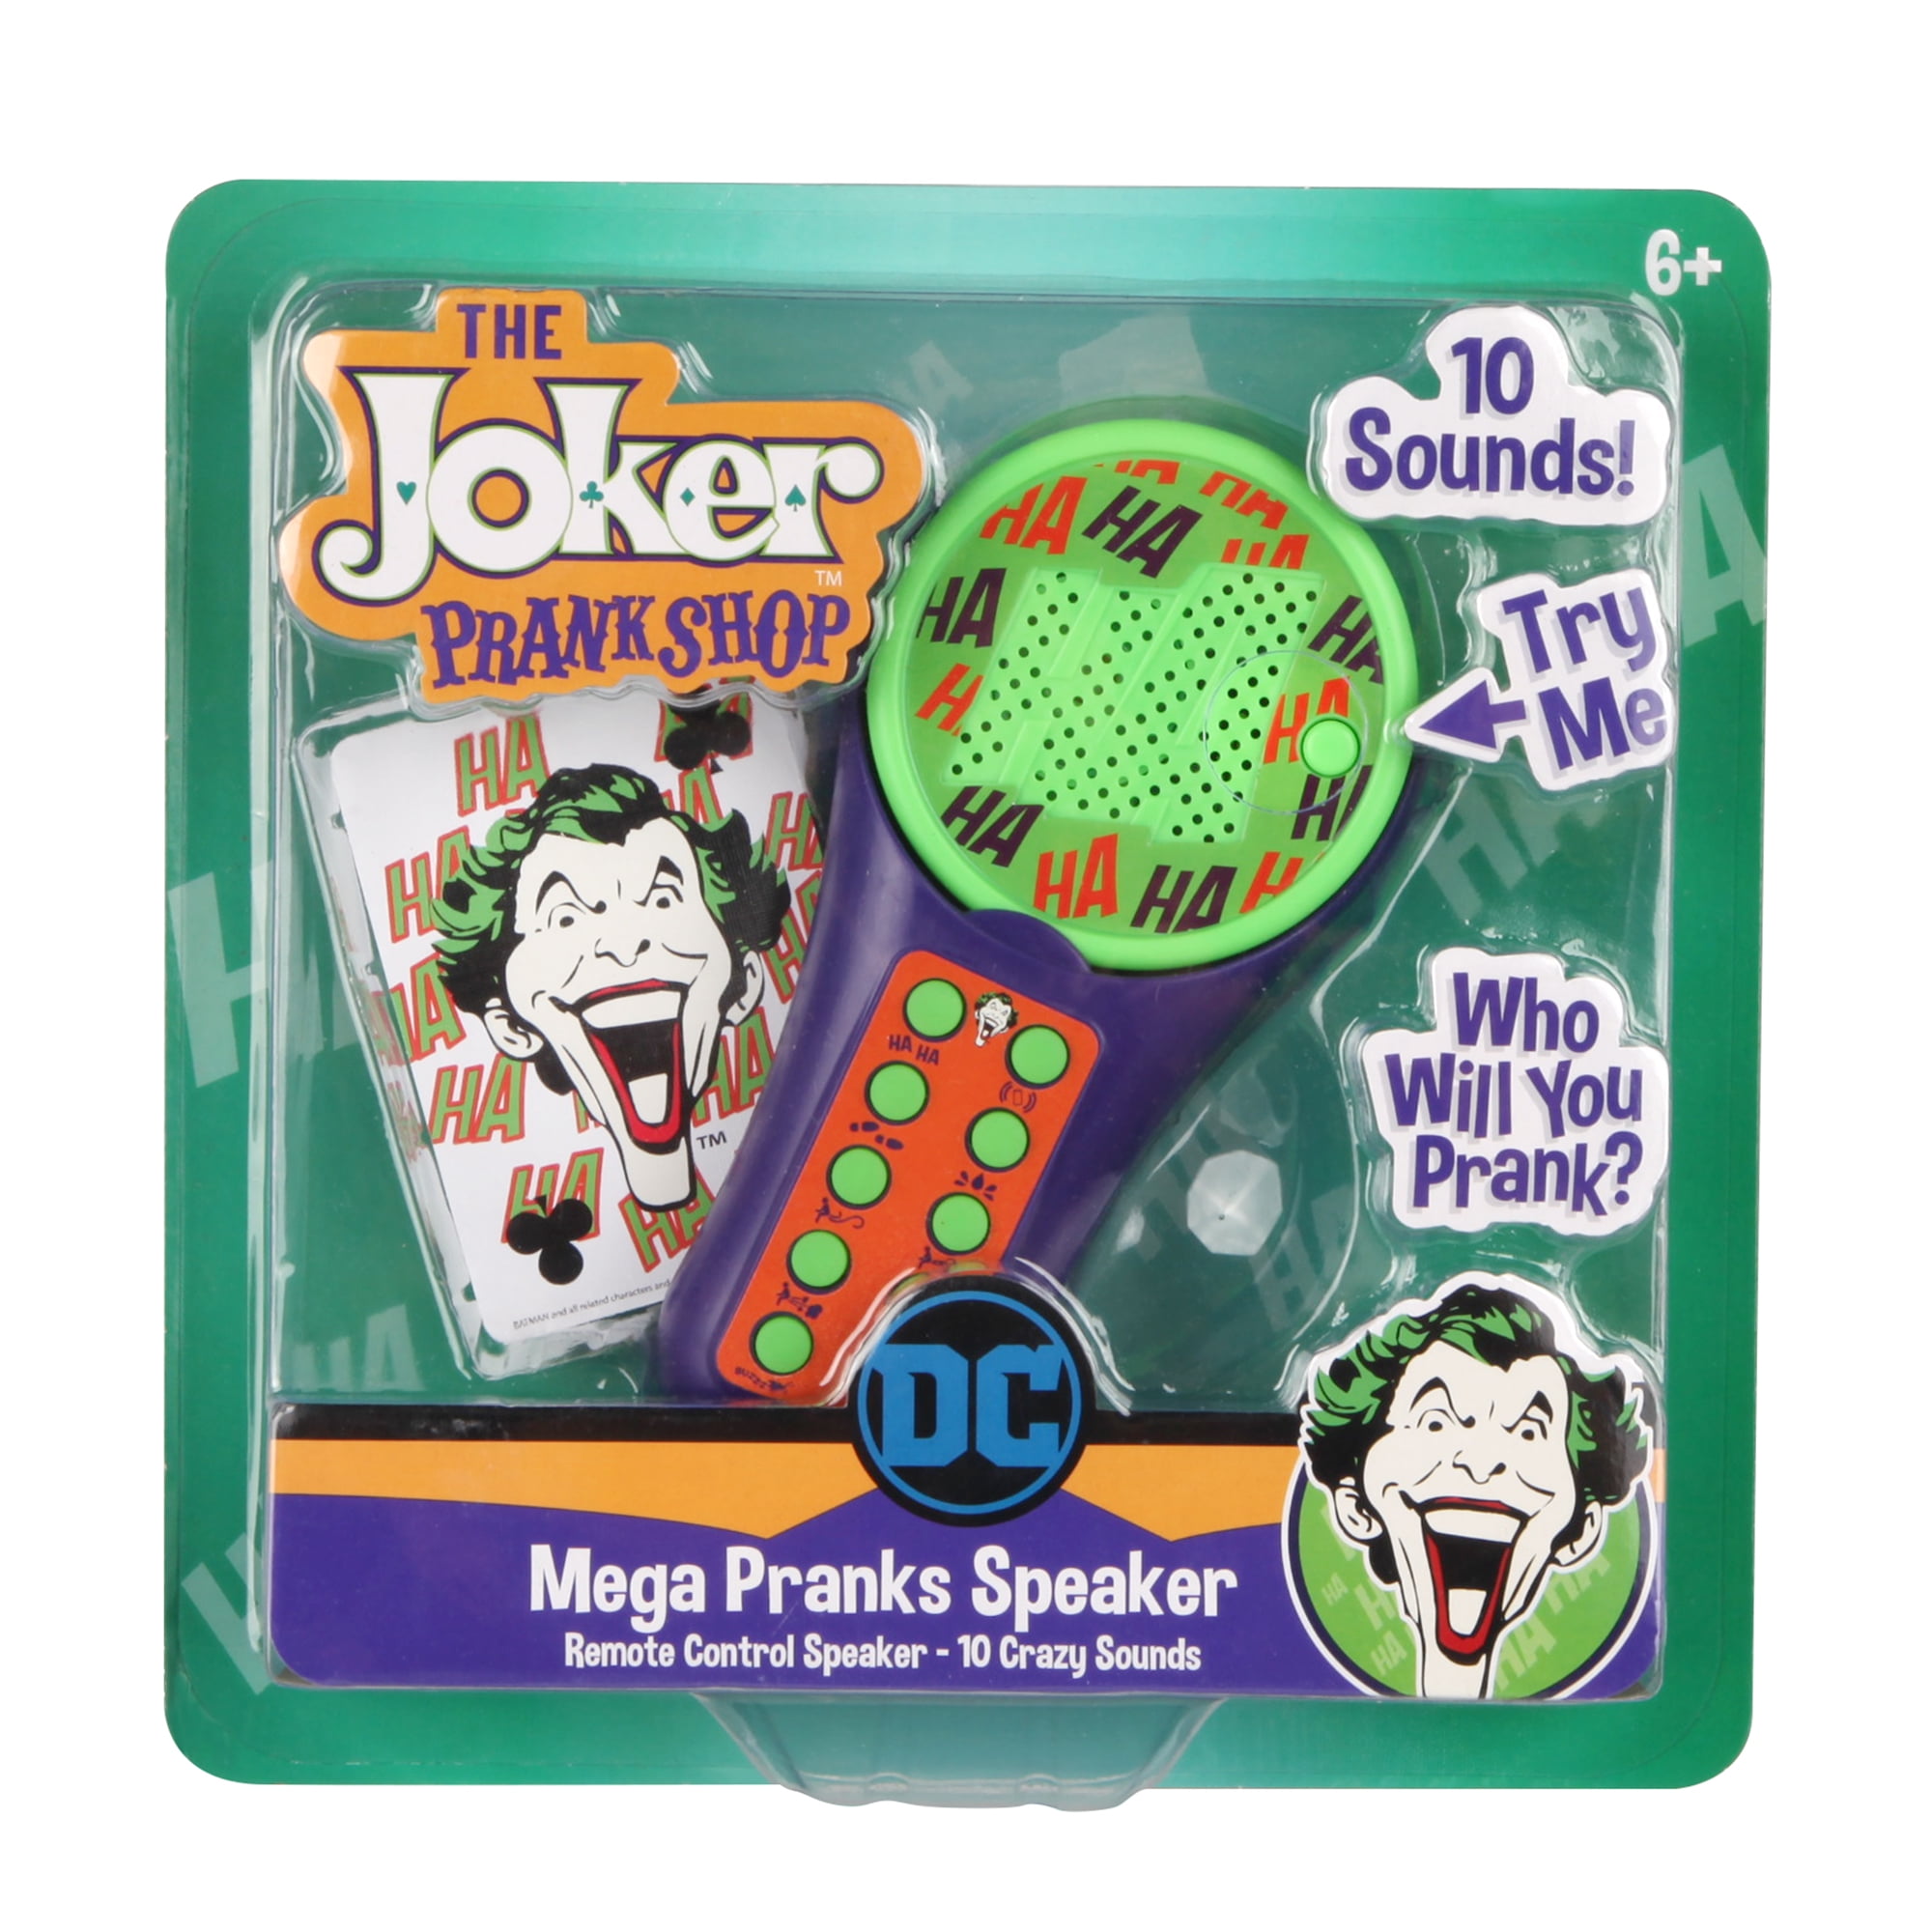 DC Ultimate Prank Kit April Fools Toy Details about   The Joker Prank Shop 